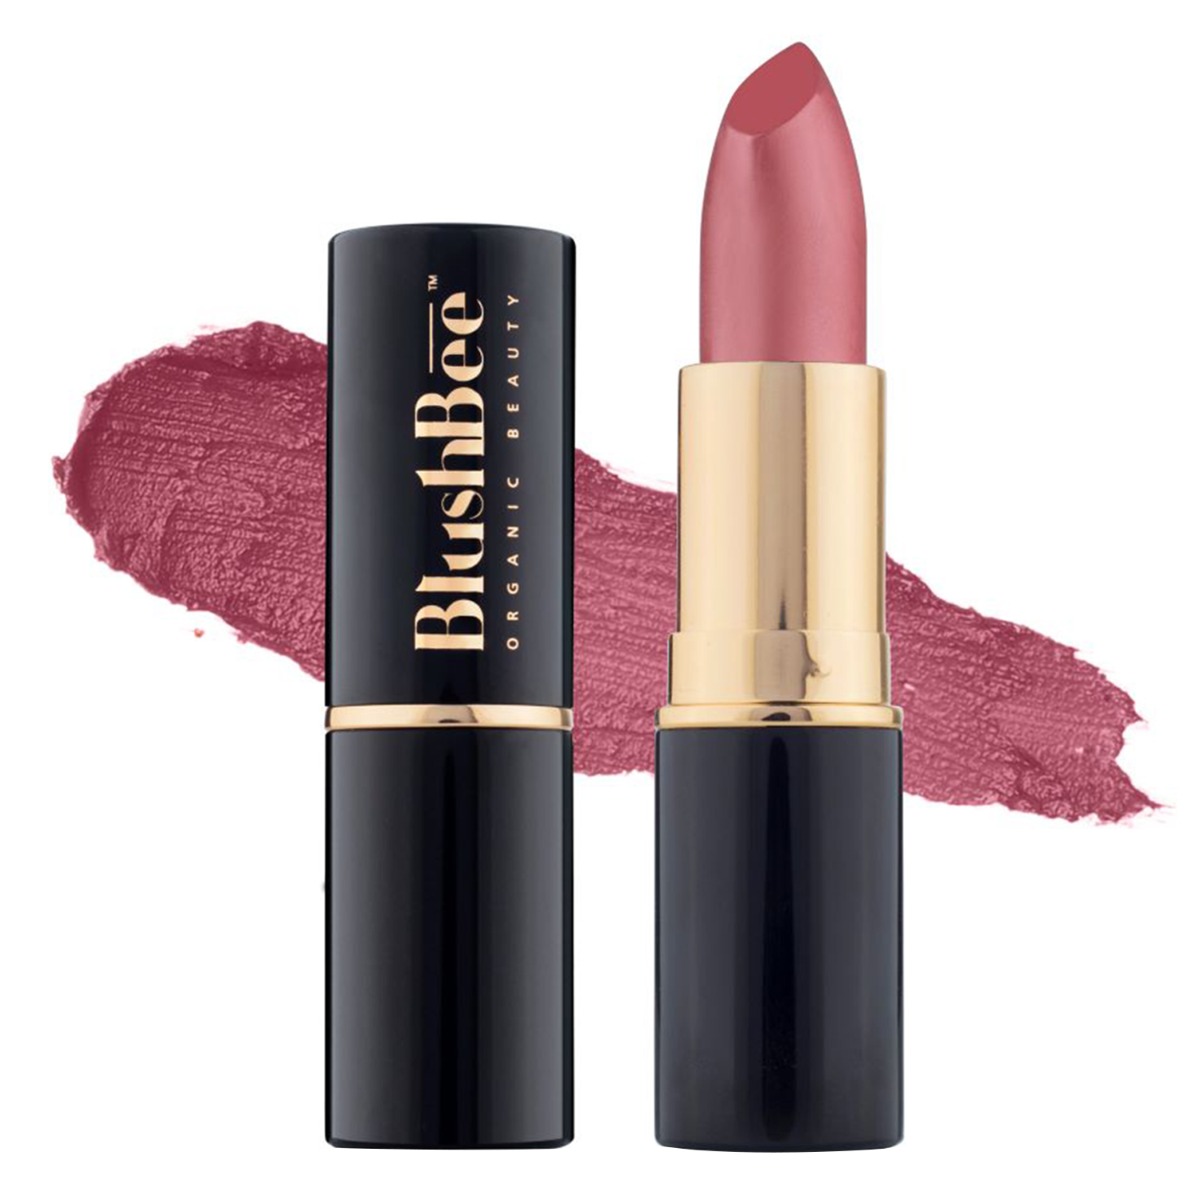 BlushBee Organic Beauty Lip Nourishing Organic Vegan Lipstick, 4.2gm-Spring